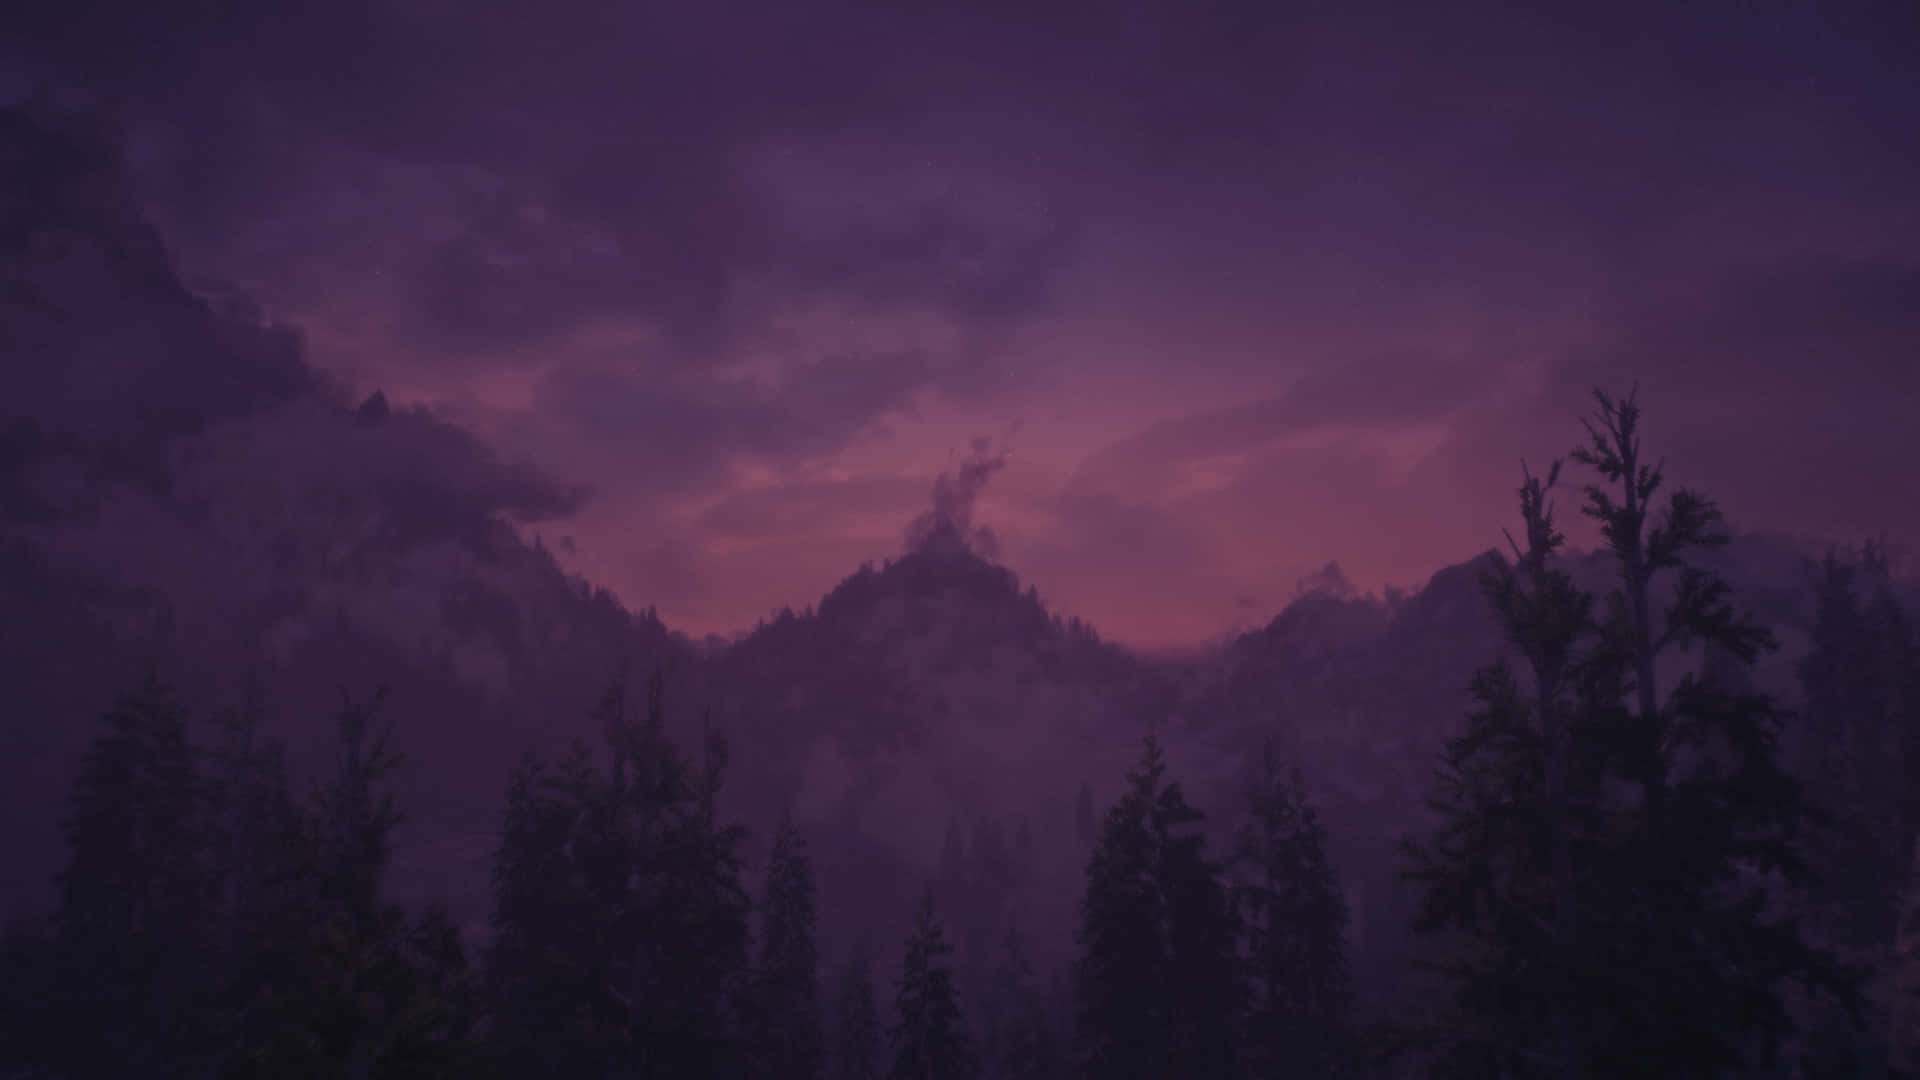 Skyrim Misty Dark Mountain Landscape Wallpaper